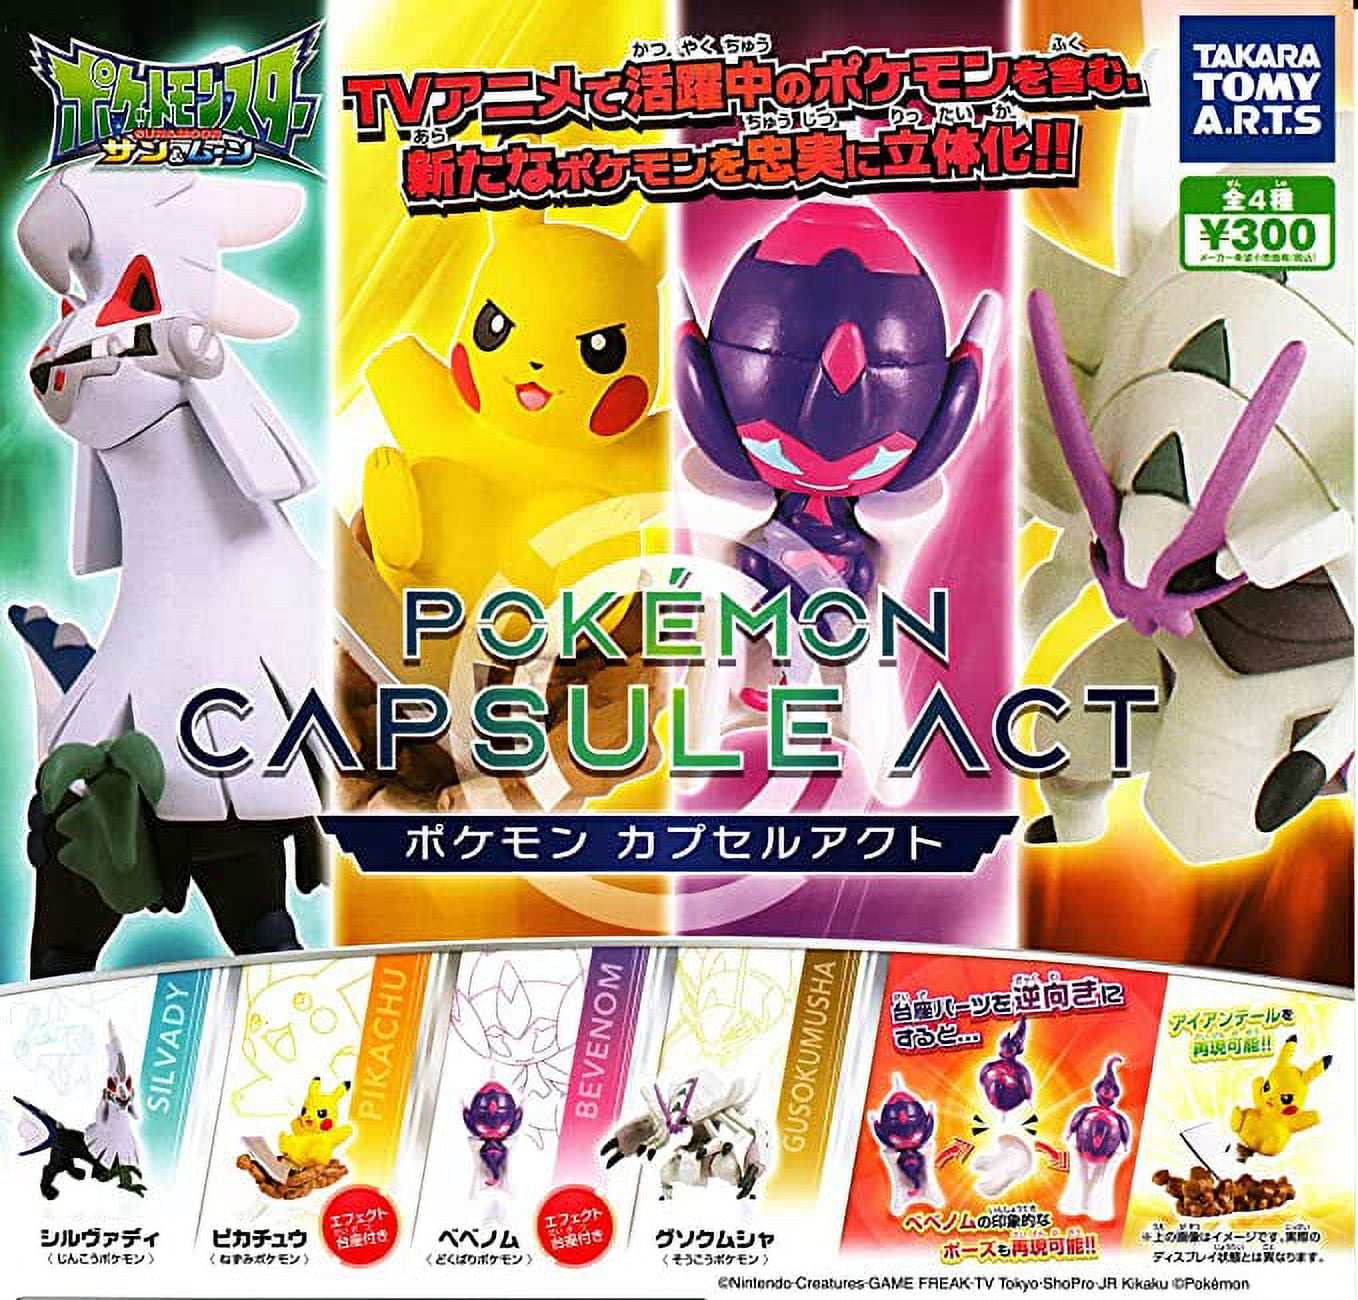 Pokemon mini figurine single (4-5 cm) - Figurines/Toys and Accessory (Pop!,  Anime, etc.) » Pokemon Figure & Accessories » Pokemon Figurines - Carta  Magica Montreal